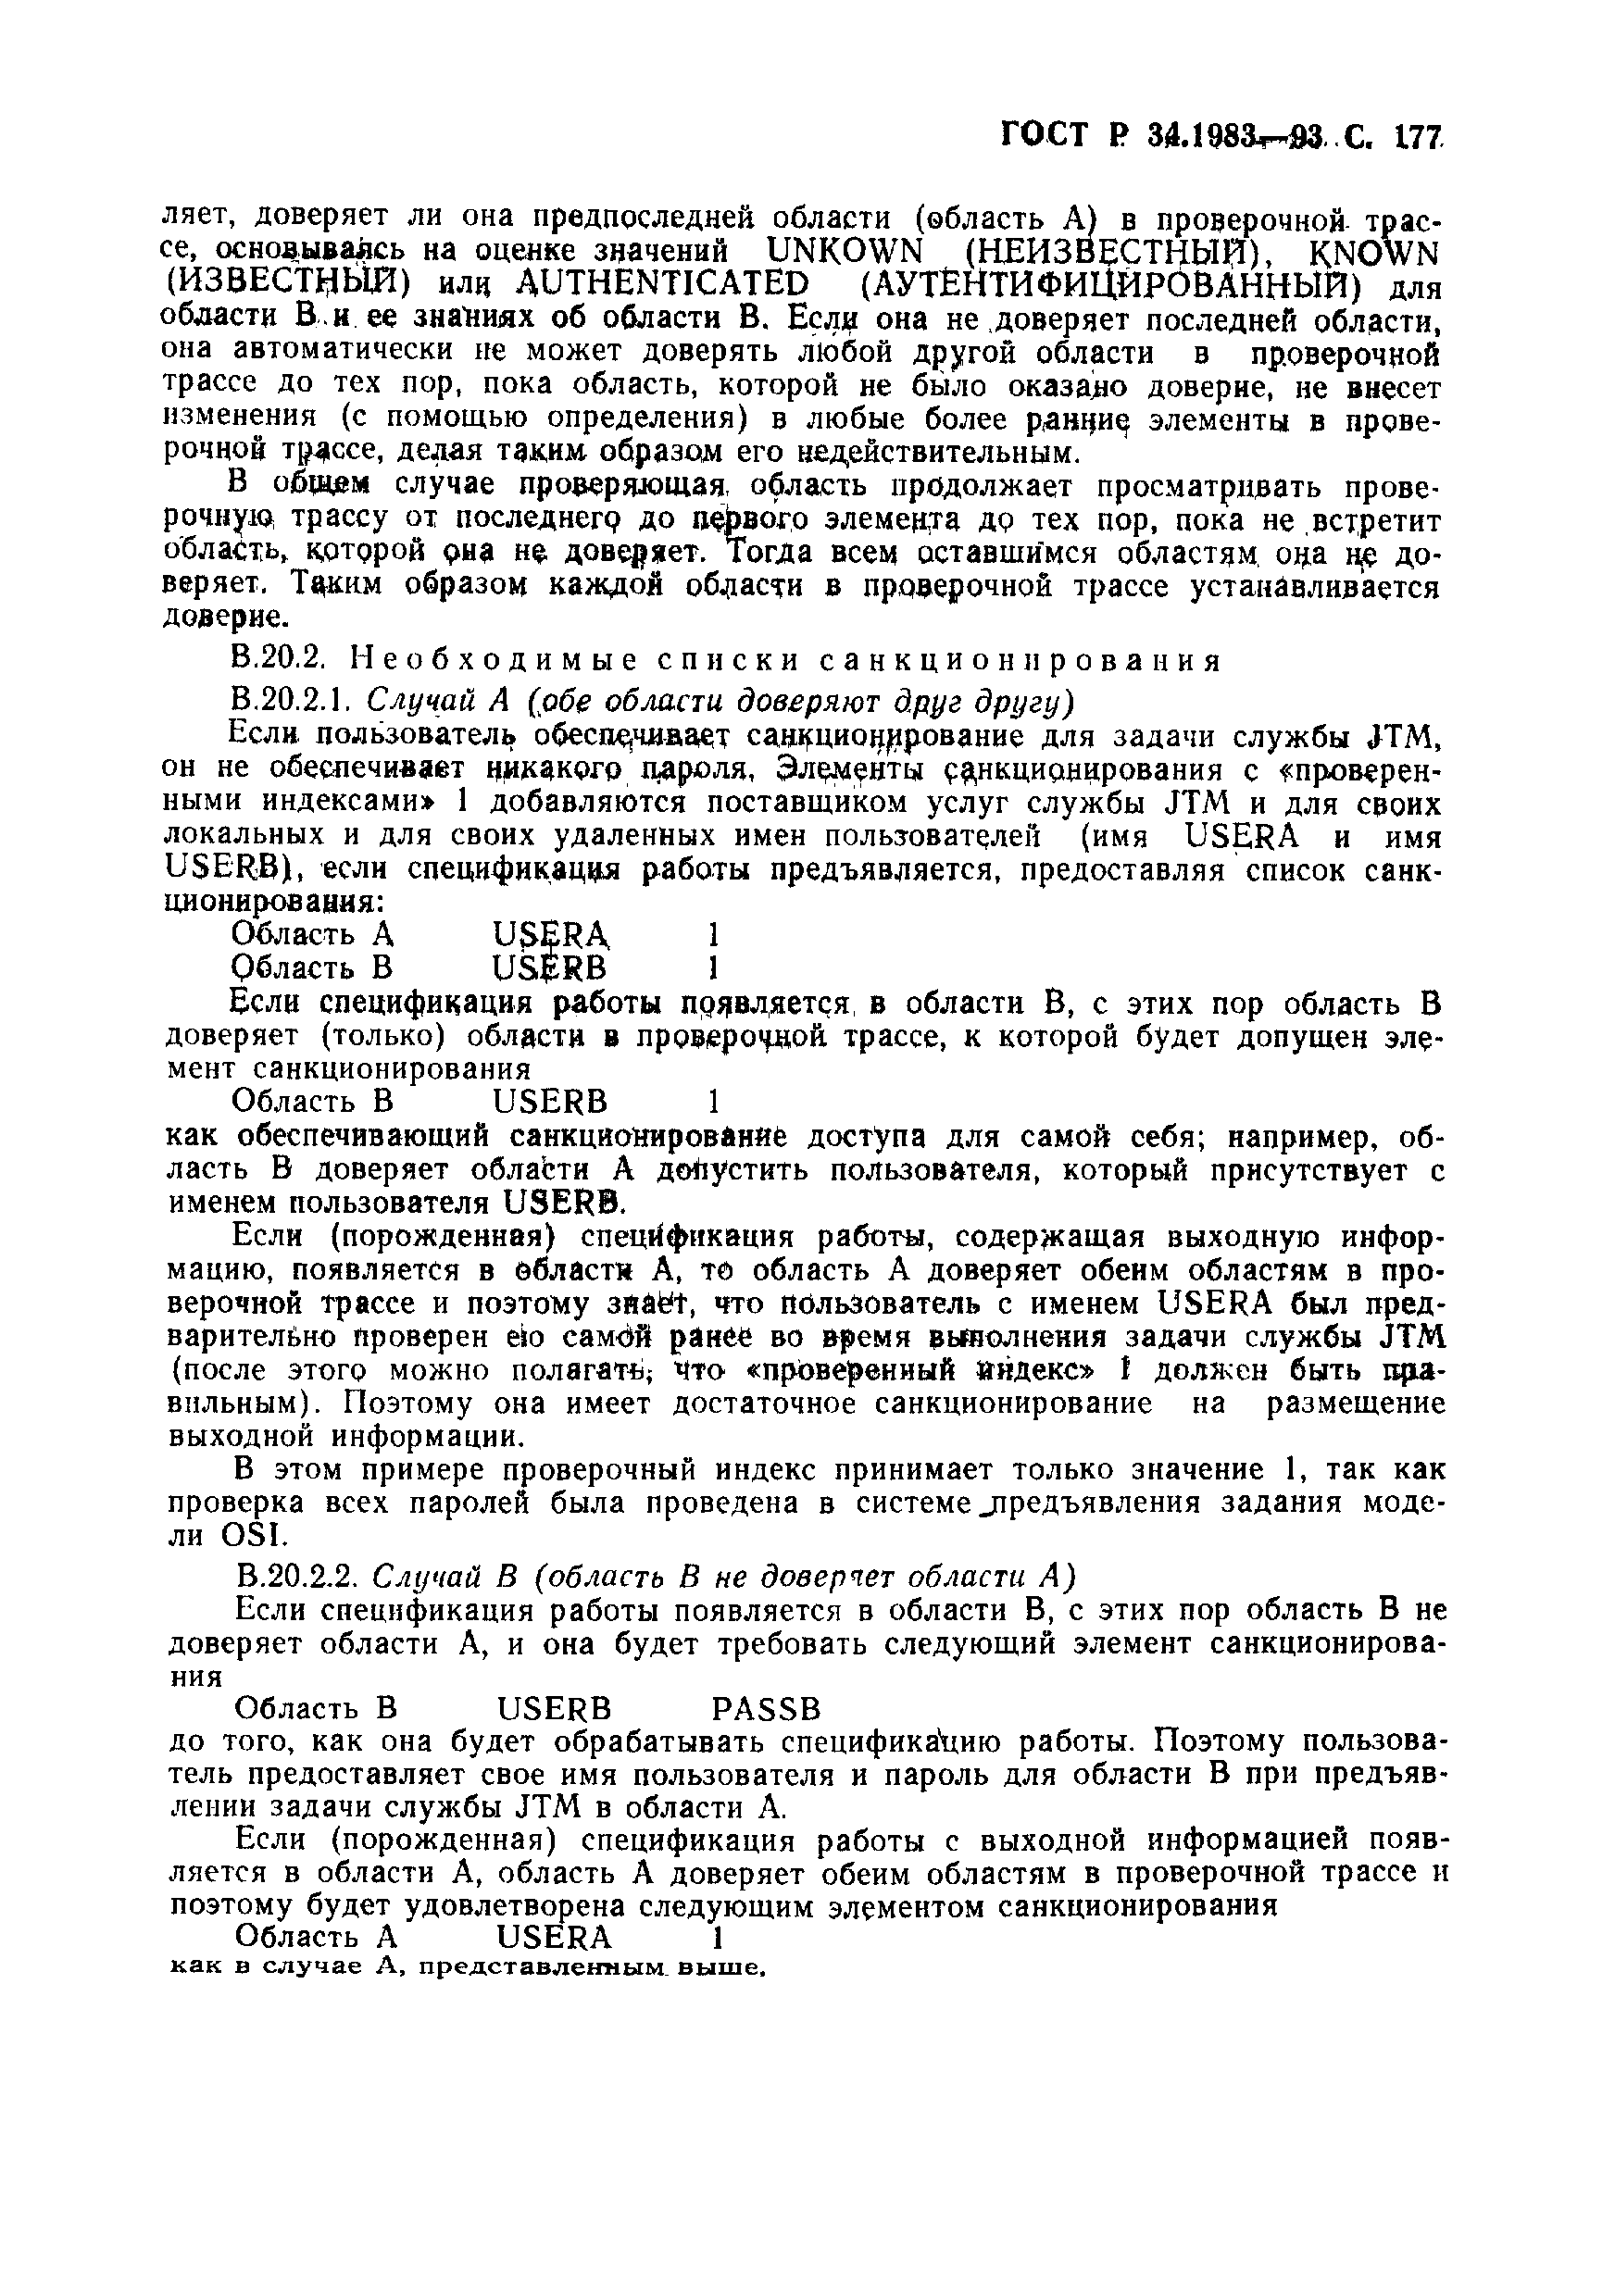 ГОСТ Р 34.1983-93. Страница 178